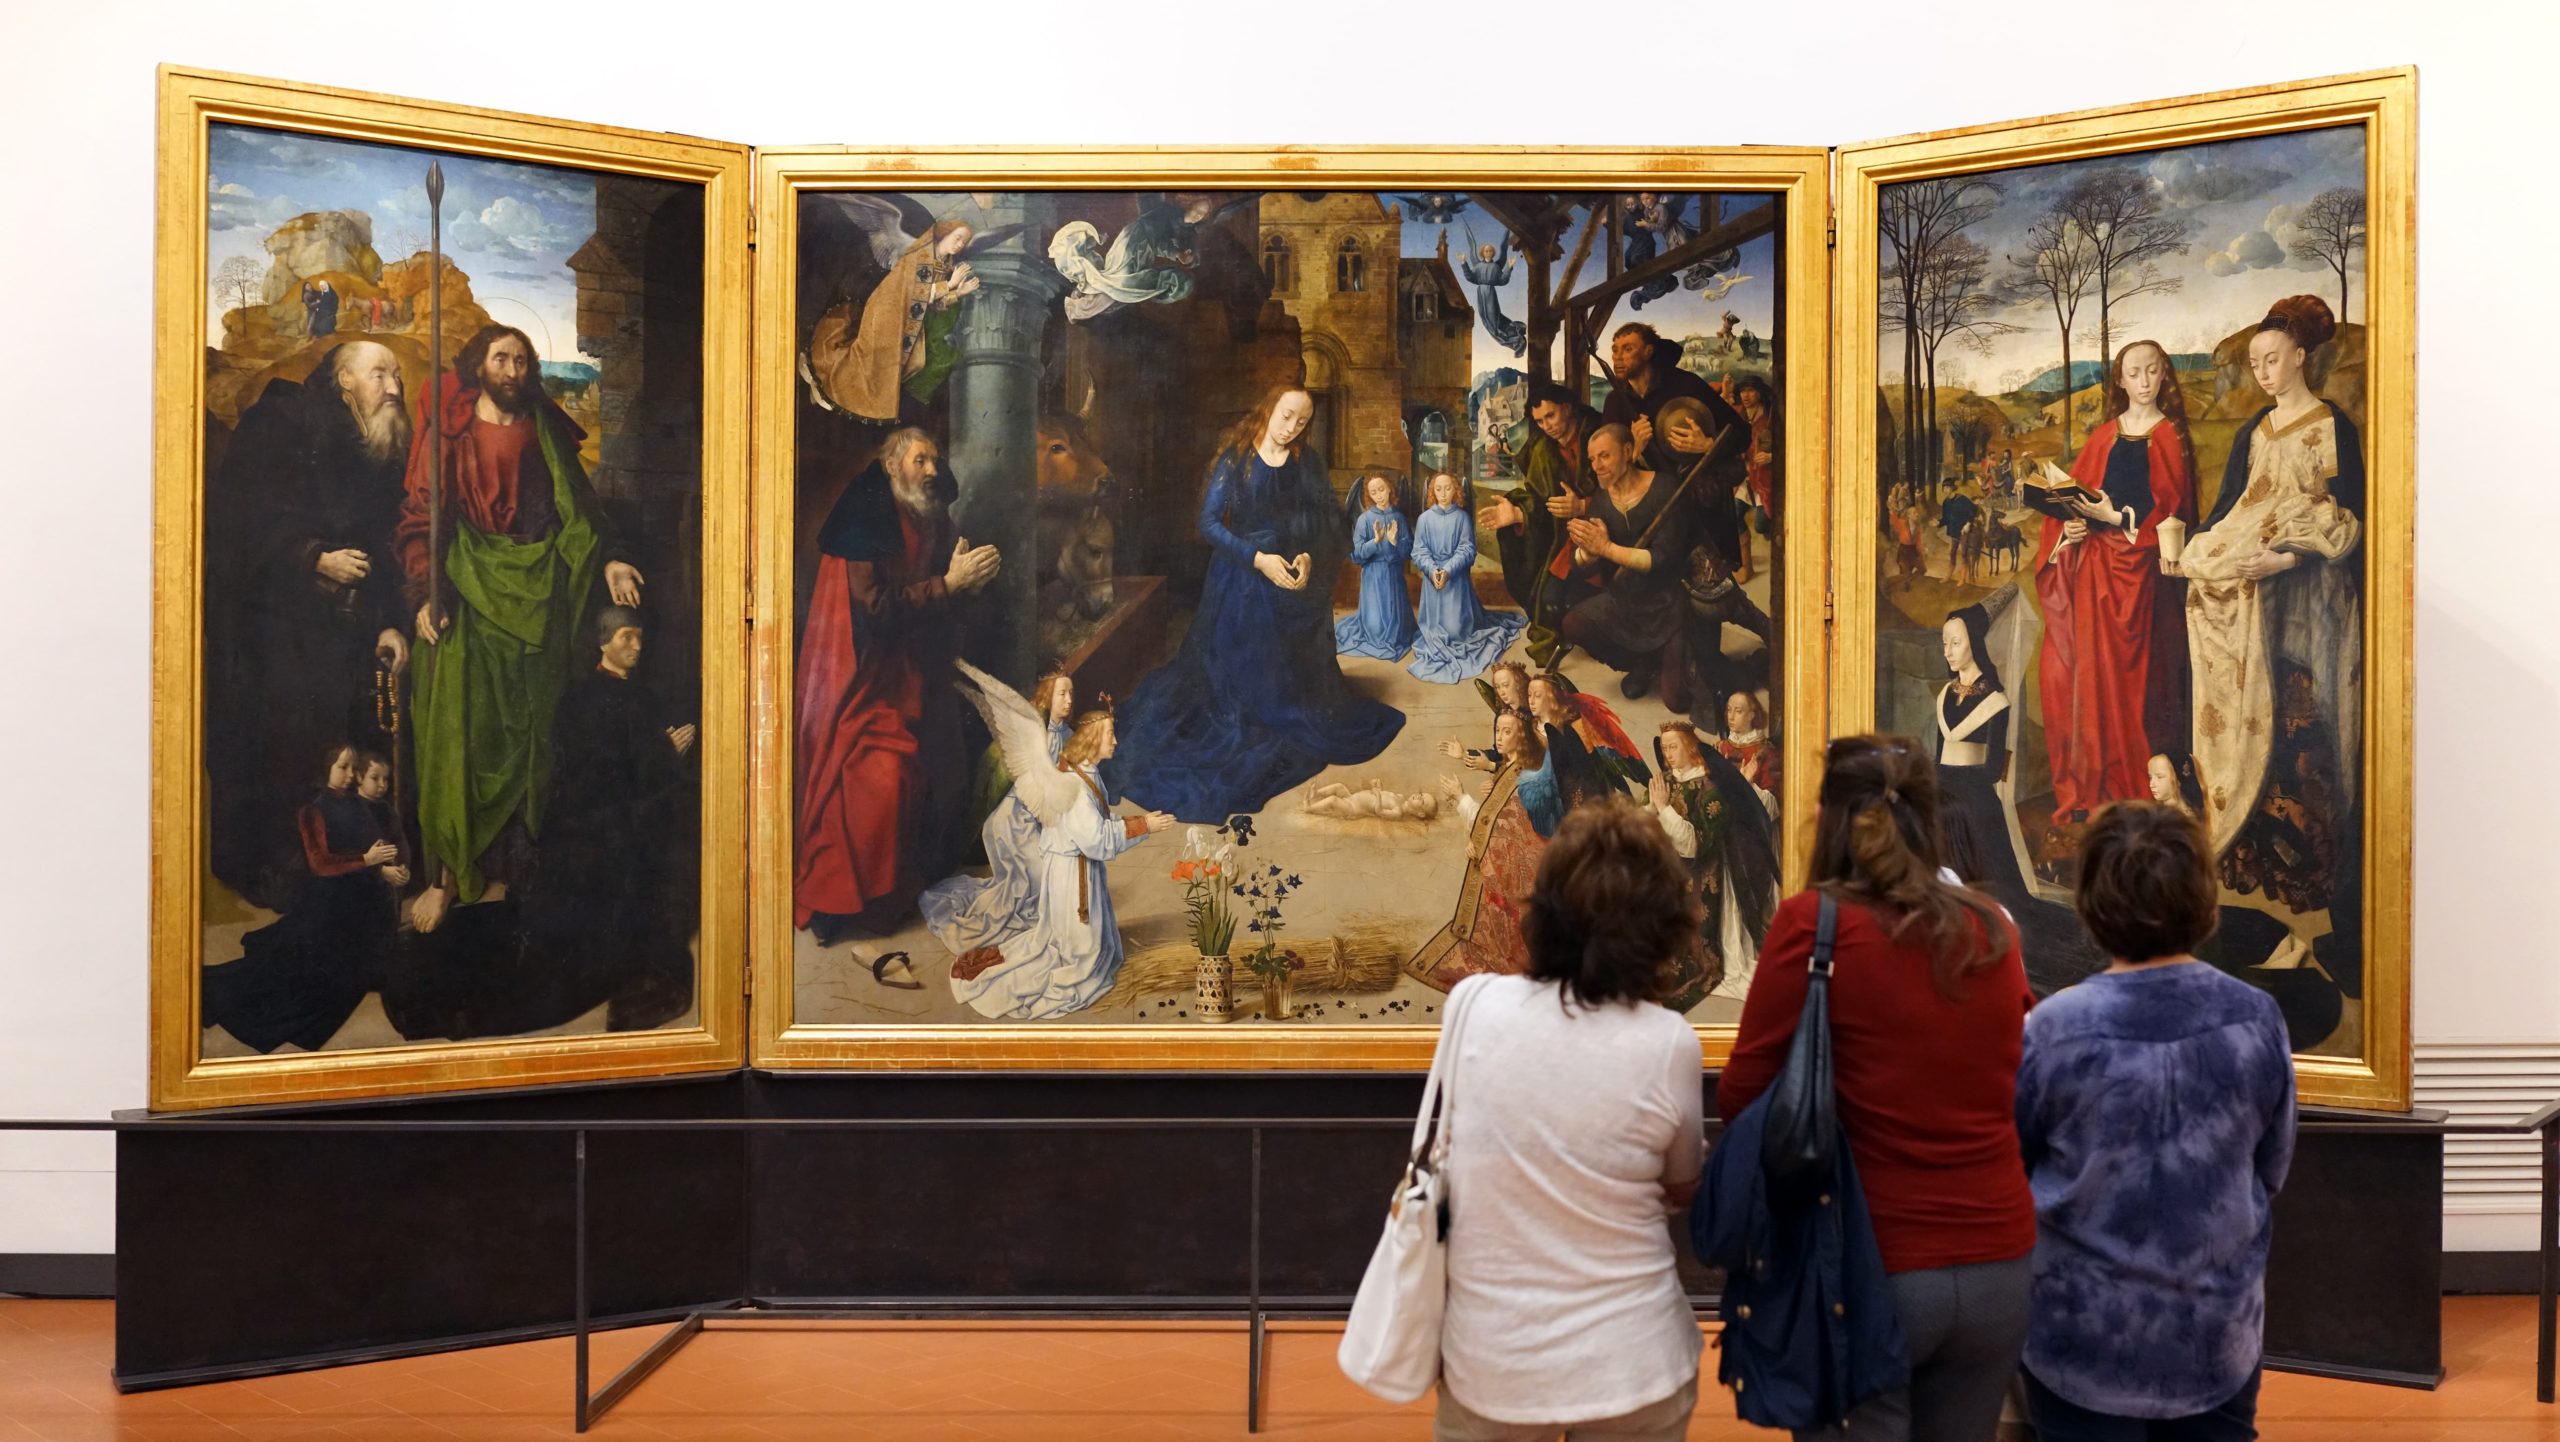 Hugo van der Goes, Portinari Altarpiece